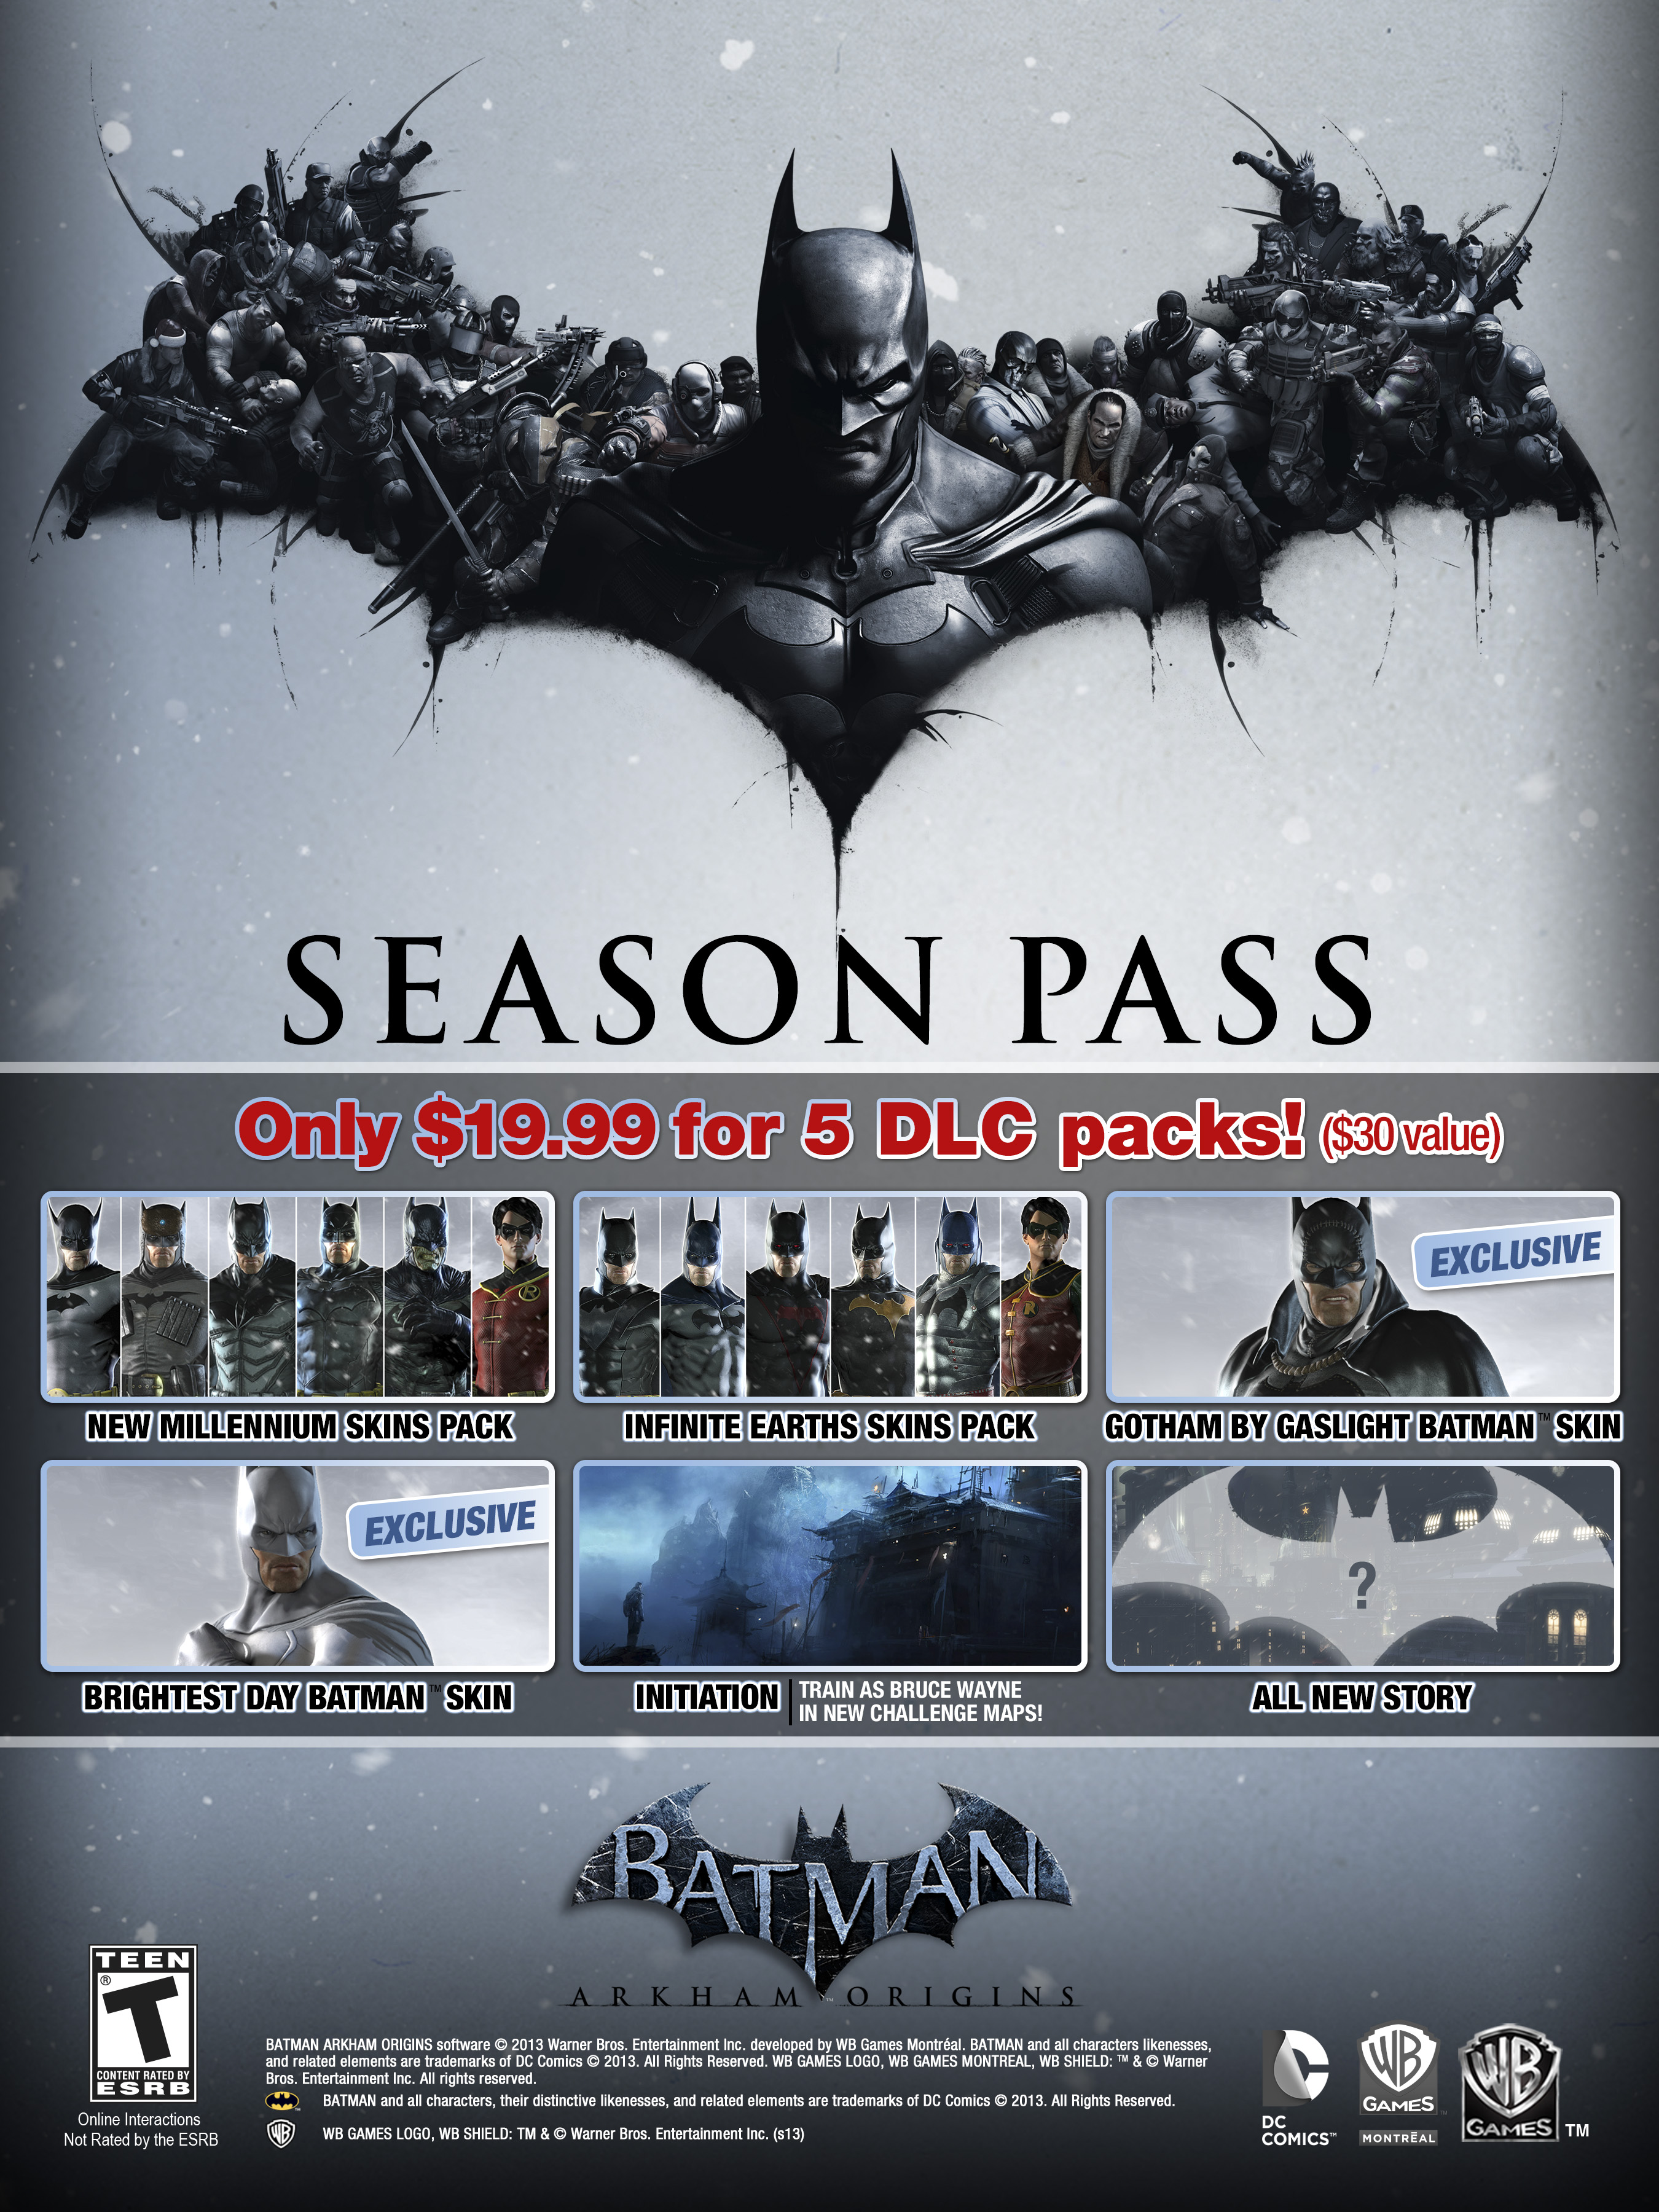 Batman: Arkham Origins' season pass announced, new DLC and skins revealed |  Batman News